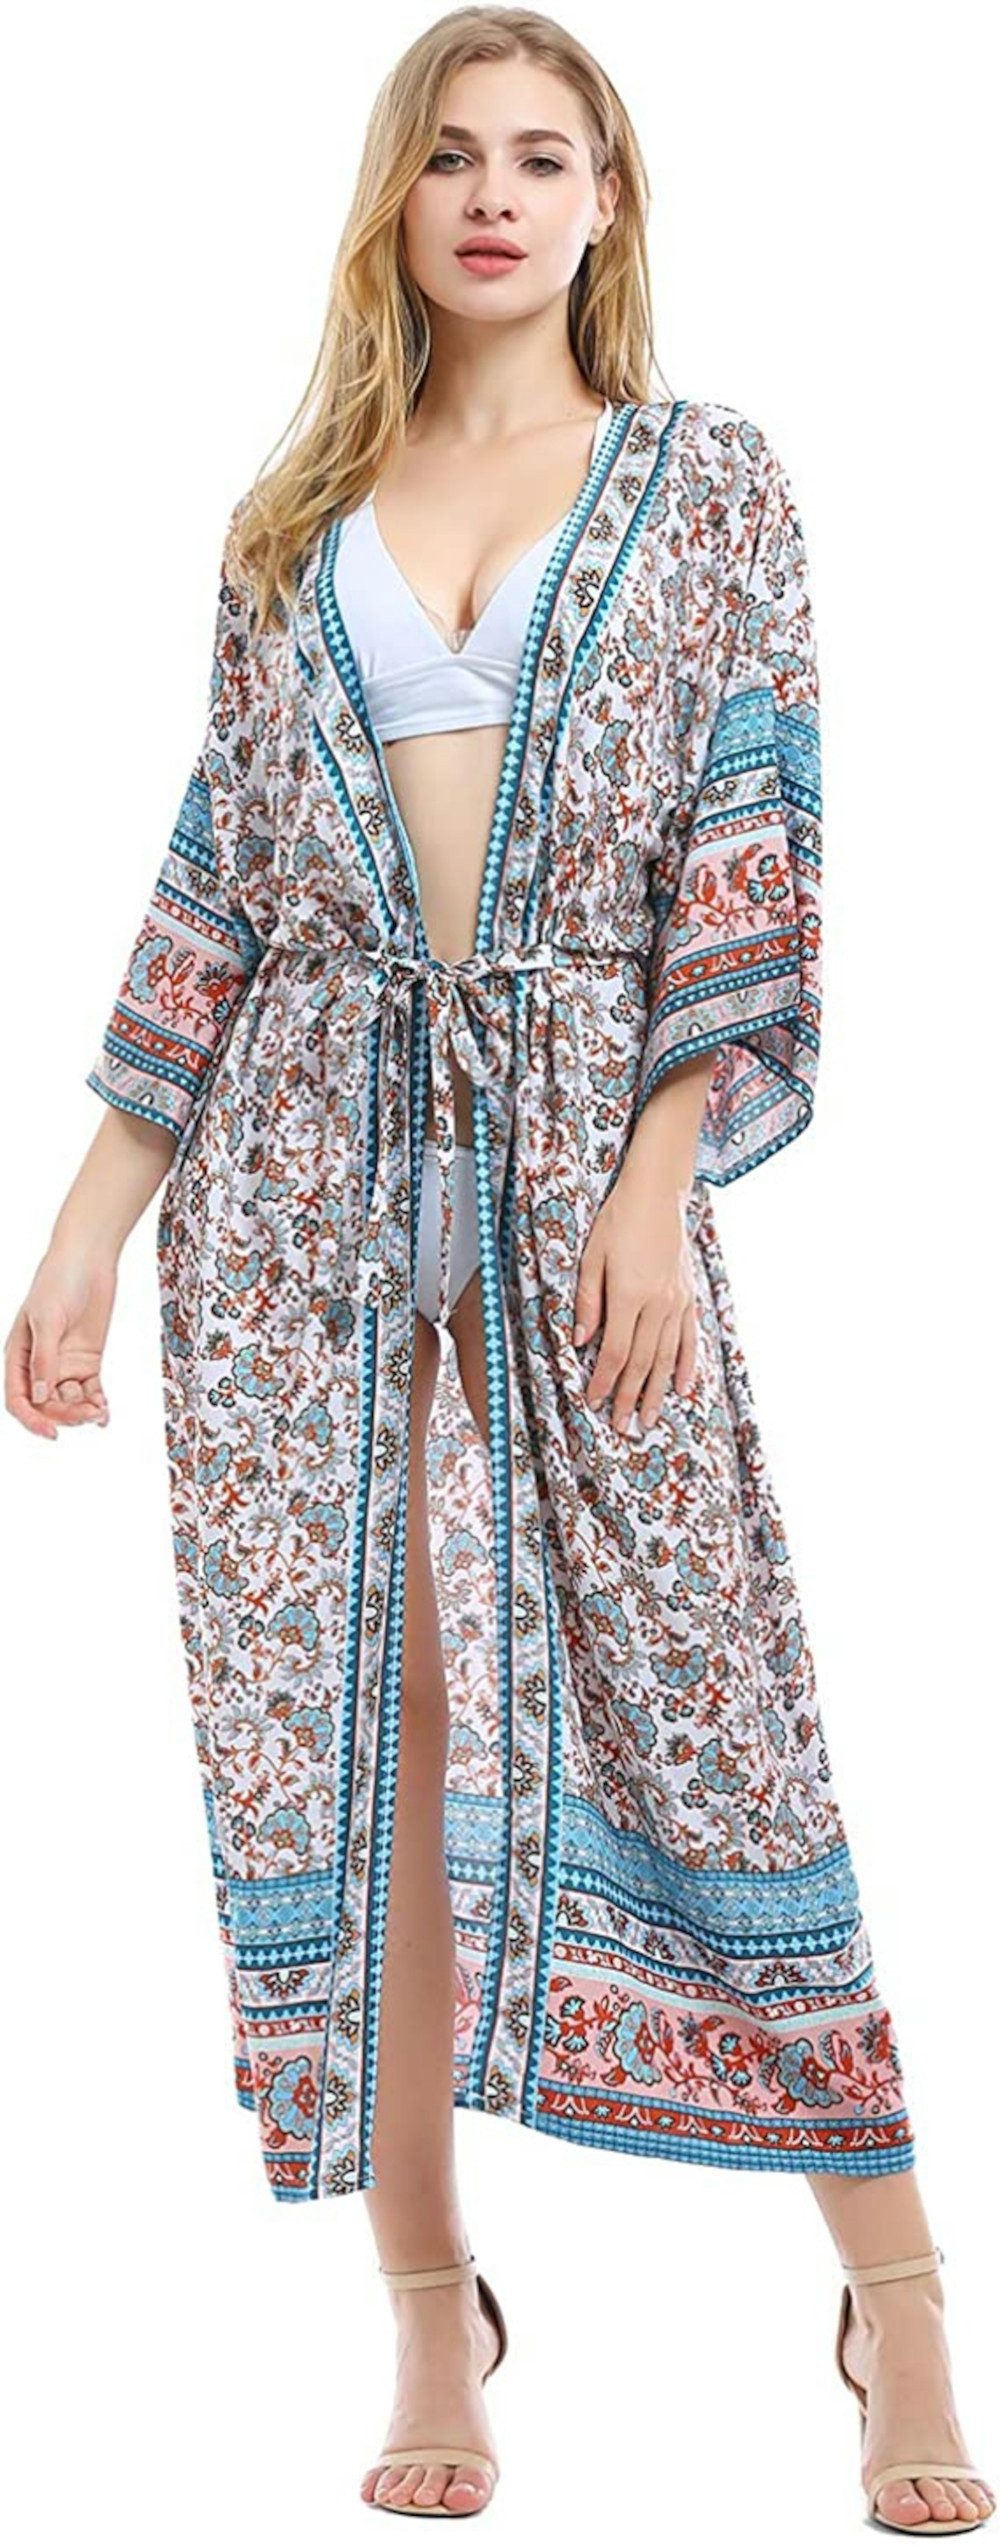 UE Stock Strandkleid Sommer Kimono Strandkleid Lang Chiffon Poncho Bikini Tunika One Size Einheitsgröße, geeignet für M-5XL